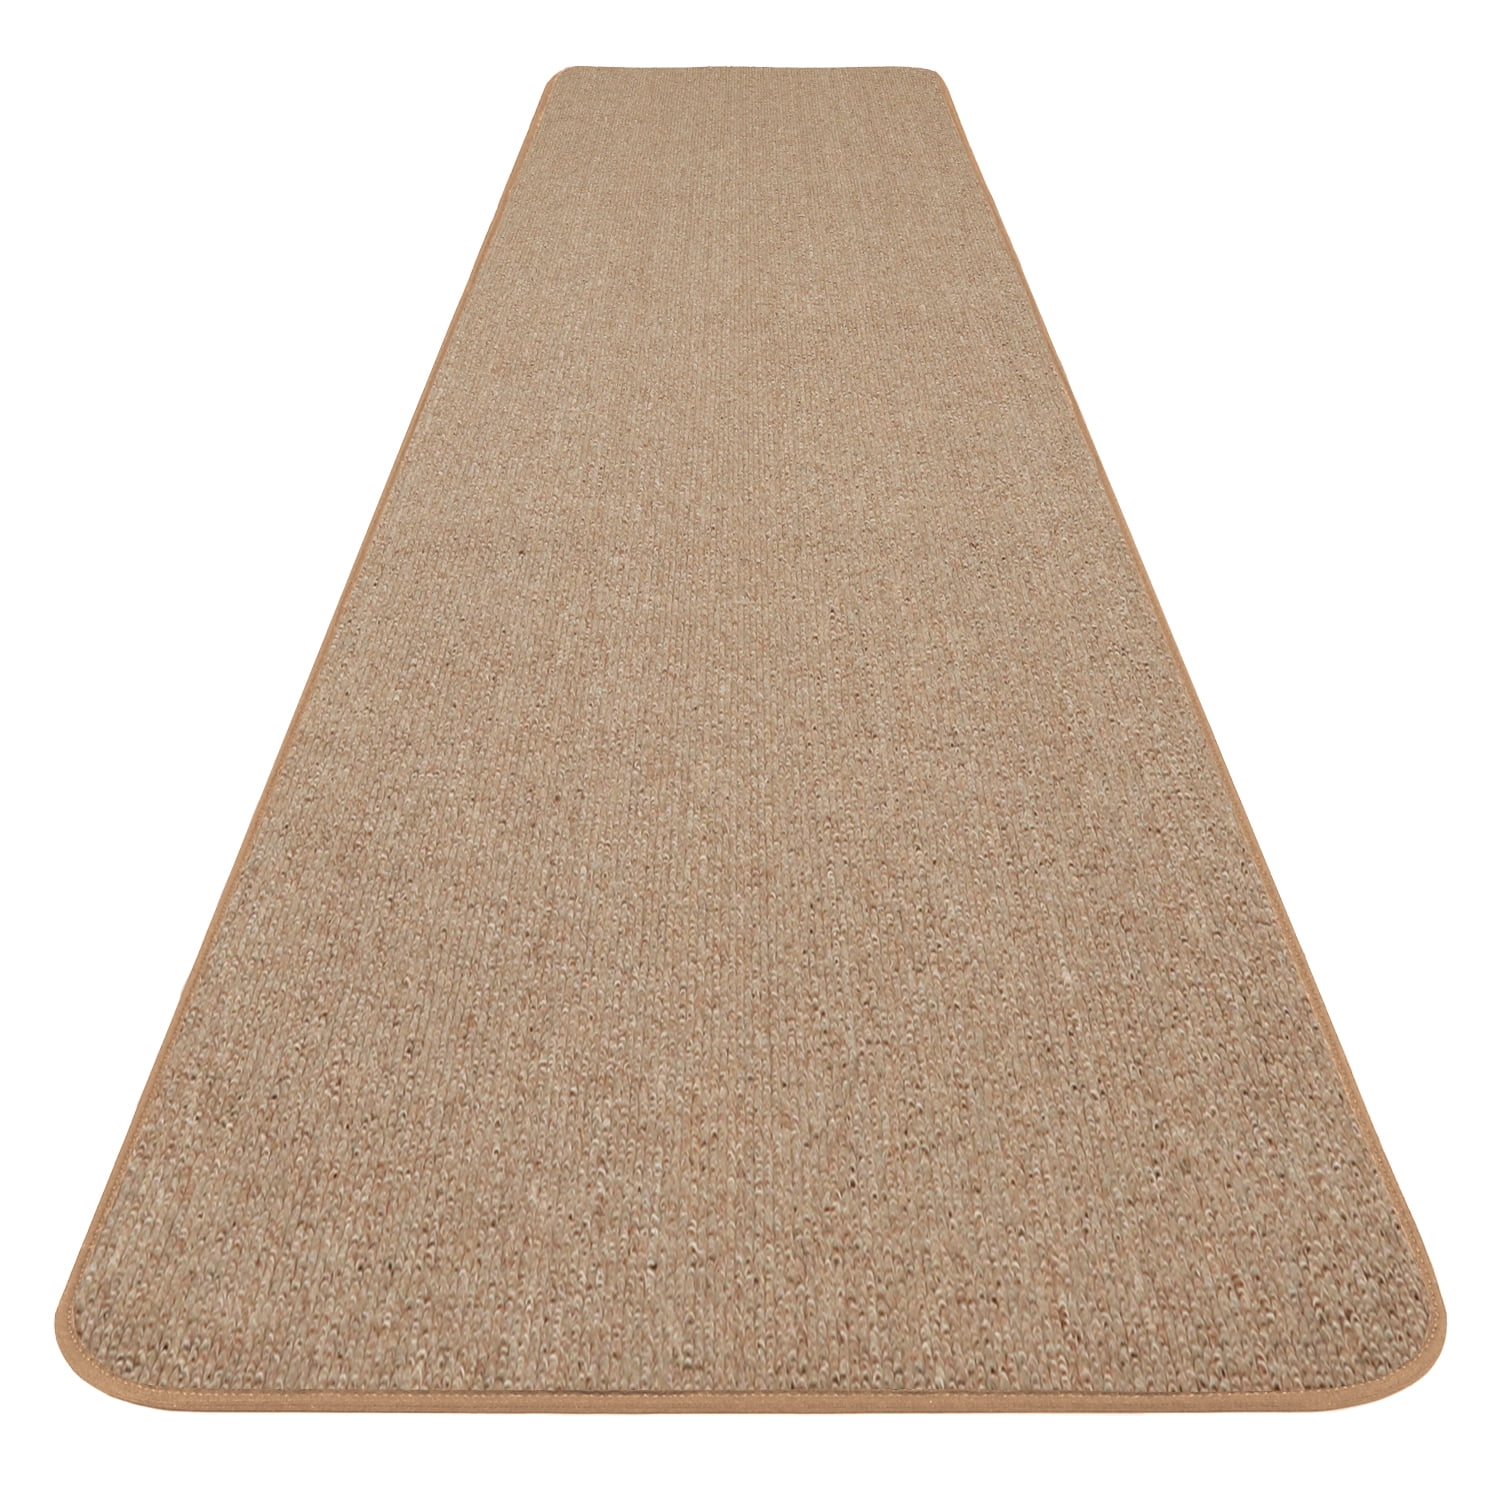 8 FT X 27 in Skid-resistant Carpet Runner Toffee Brown Hall Area Rug Floor Mat for sale online 